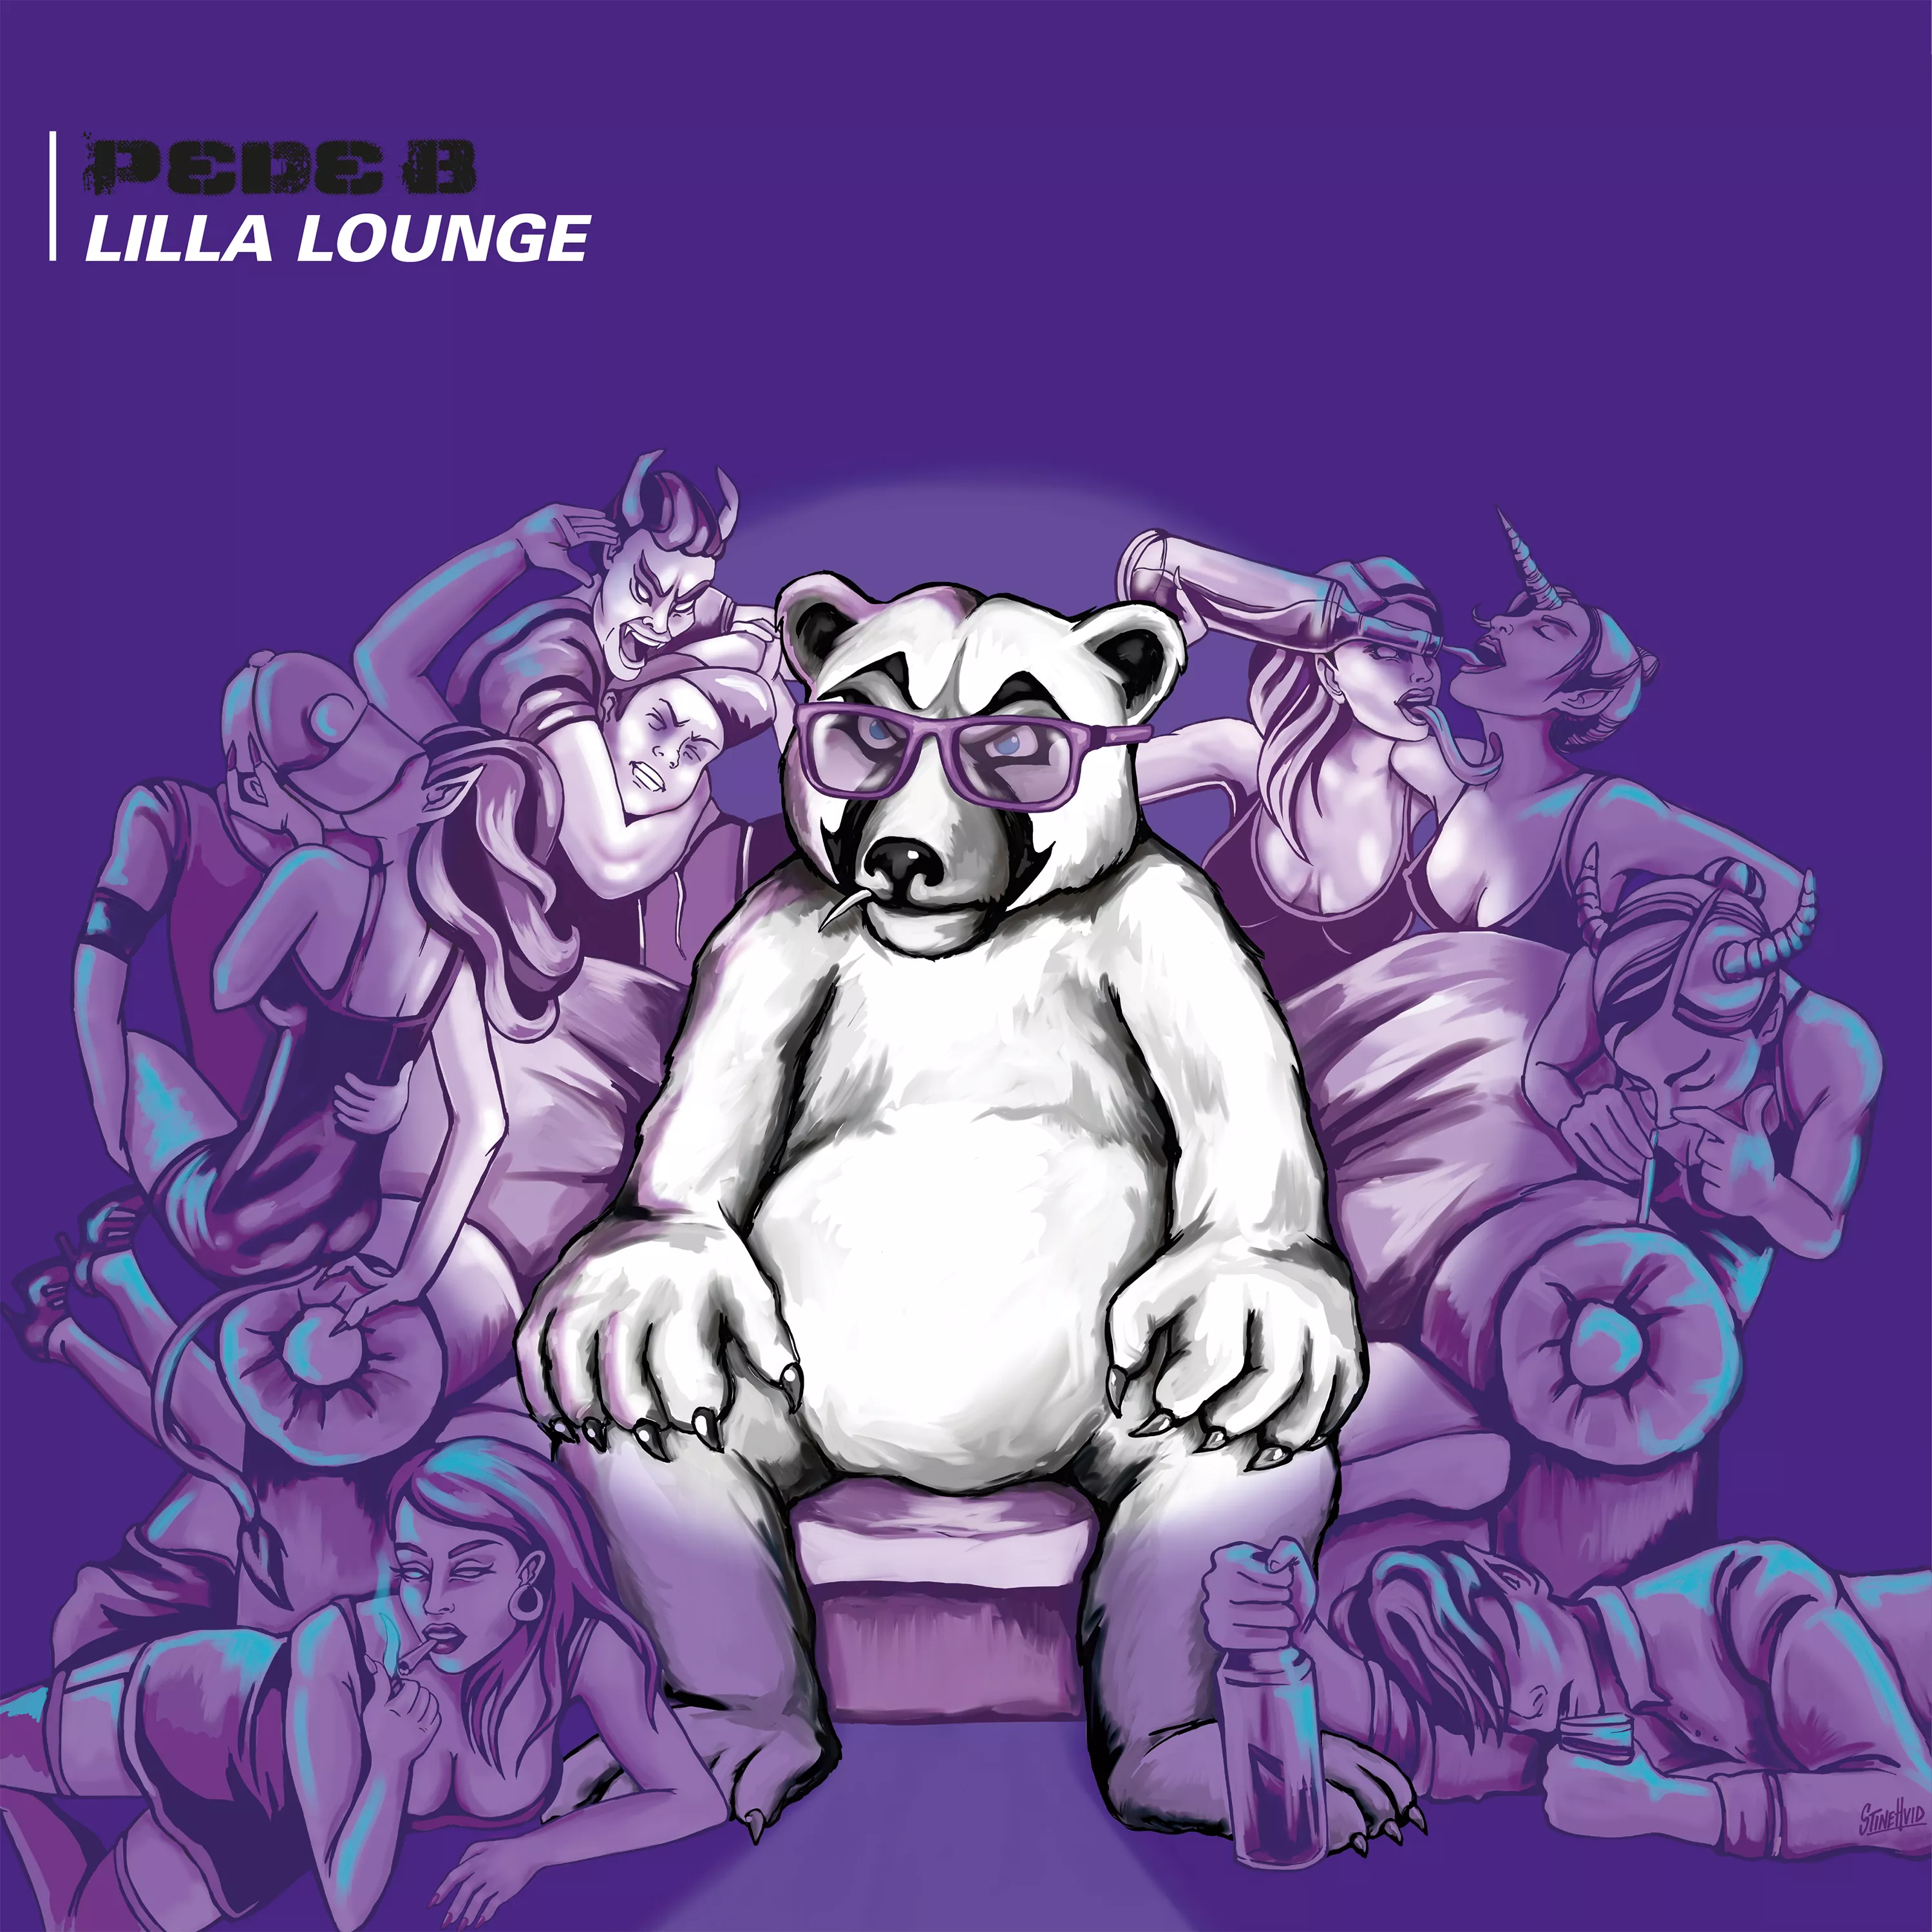 Lilla Lounge - Pede B